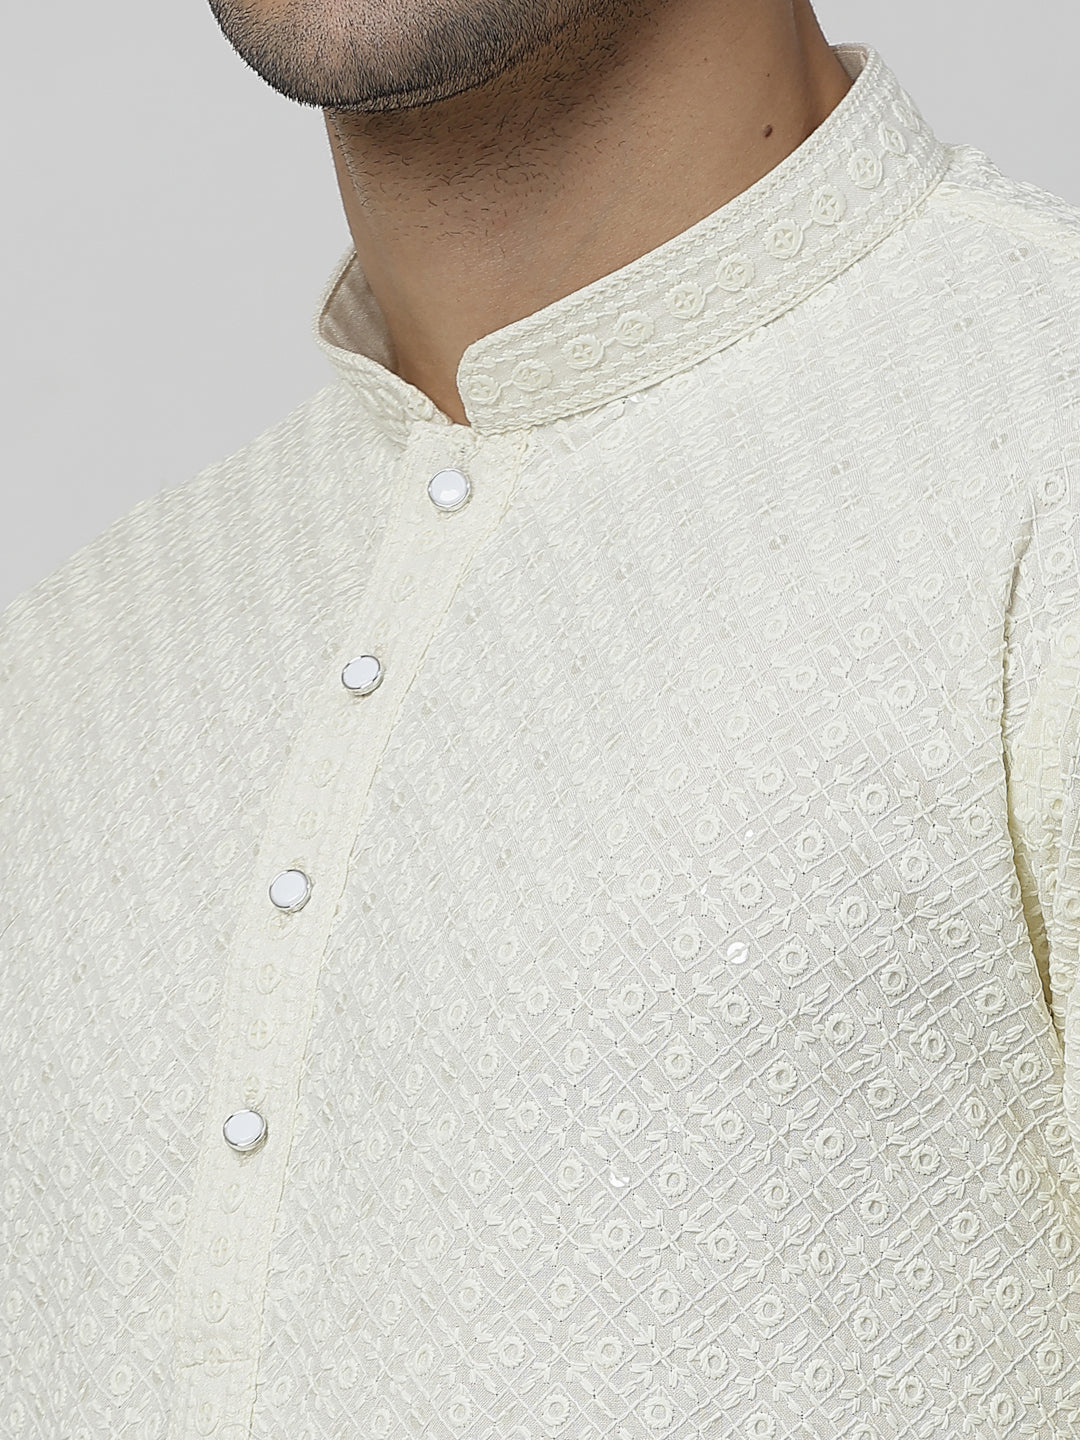 Men's Embroidery Cotton Blend Chikankari Kurta Set with White Pyjama (Off White Color)